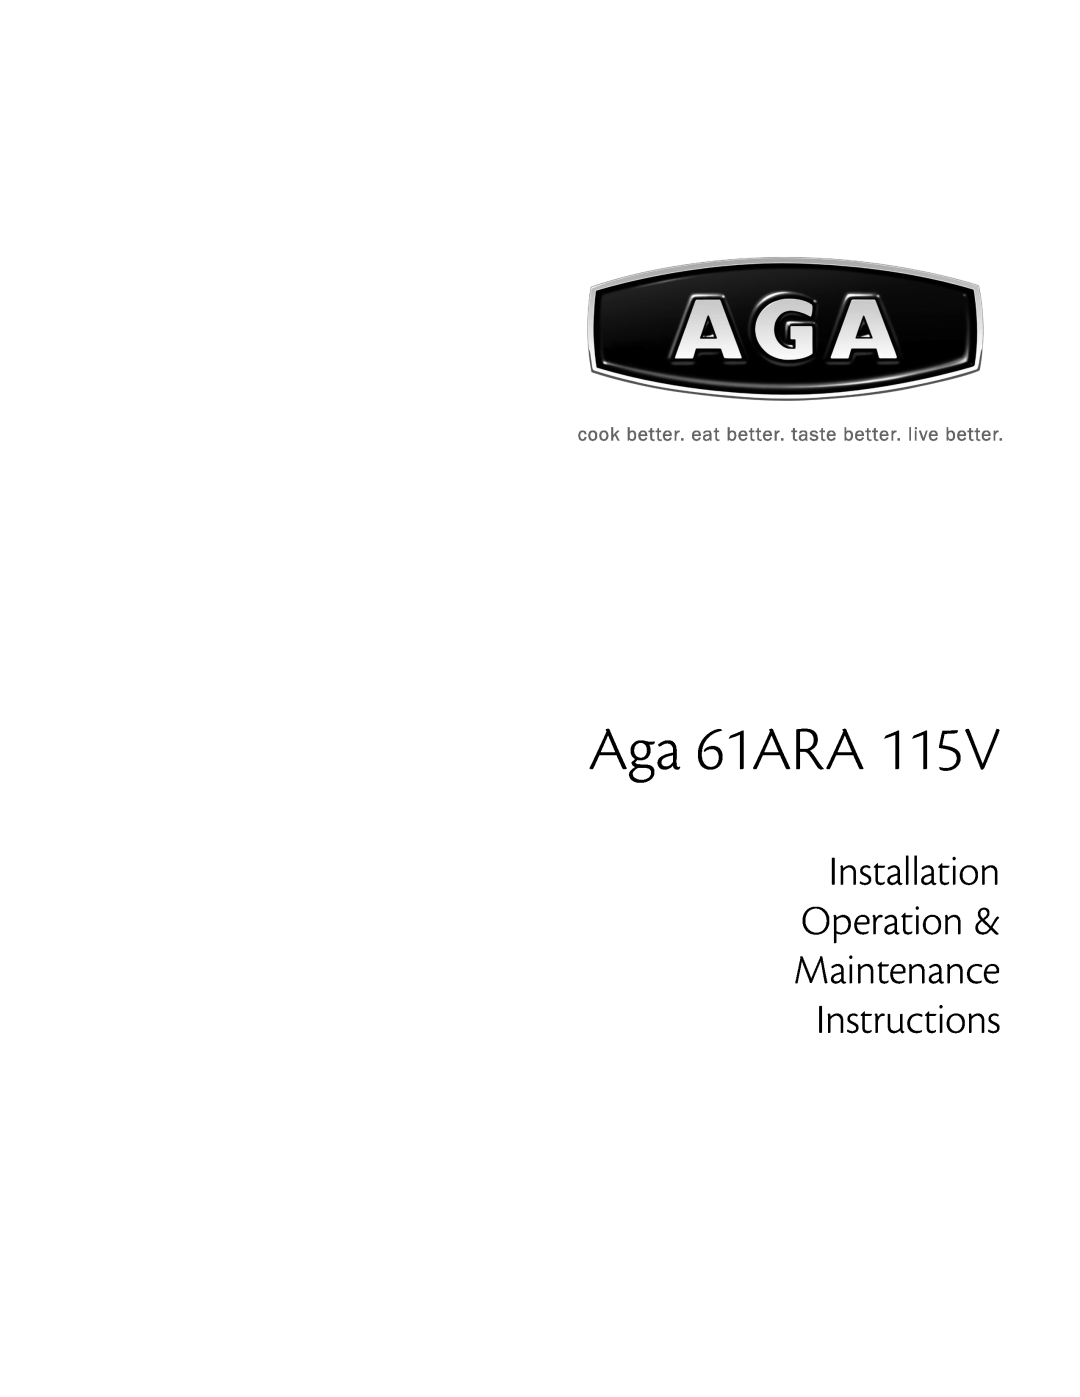 Aga Ranges 61ARA 115V manual Installation Operation Maintenance Instructions, Aga 61ARA 